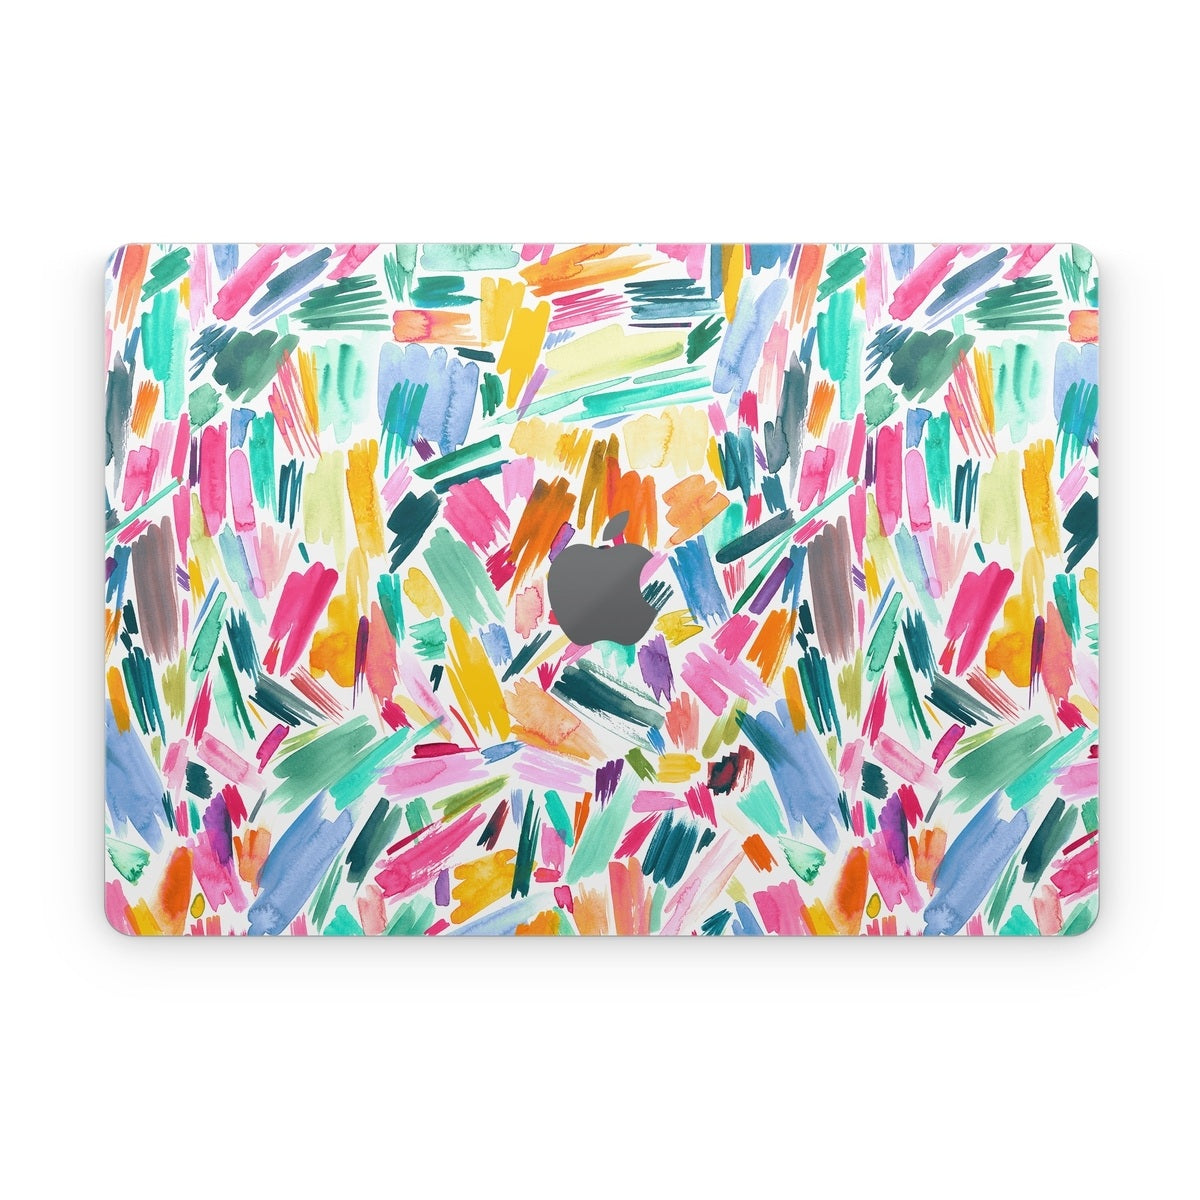 Watercolor Colorful Brushstrokes - Apple MacBook Skin